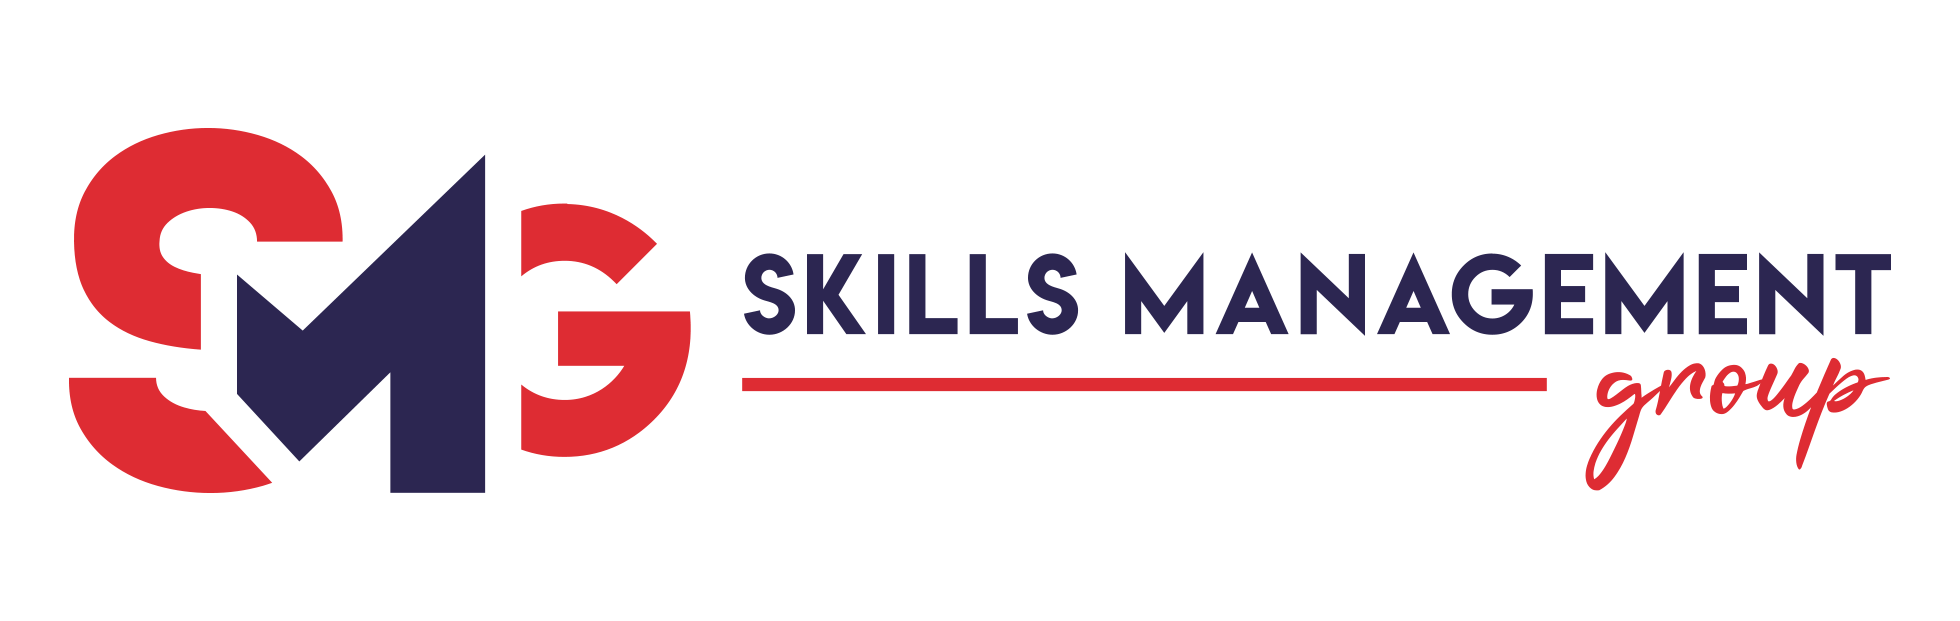 Skills Management Group